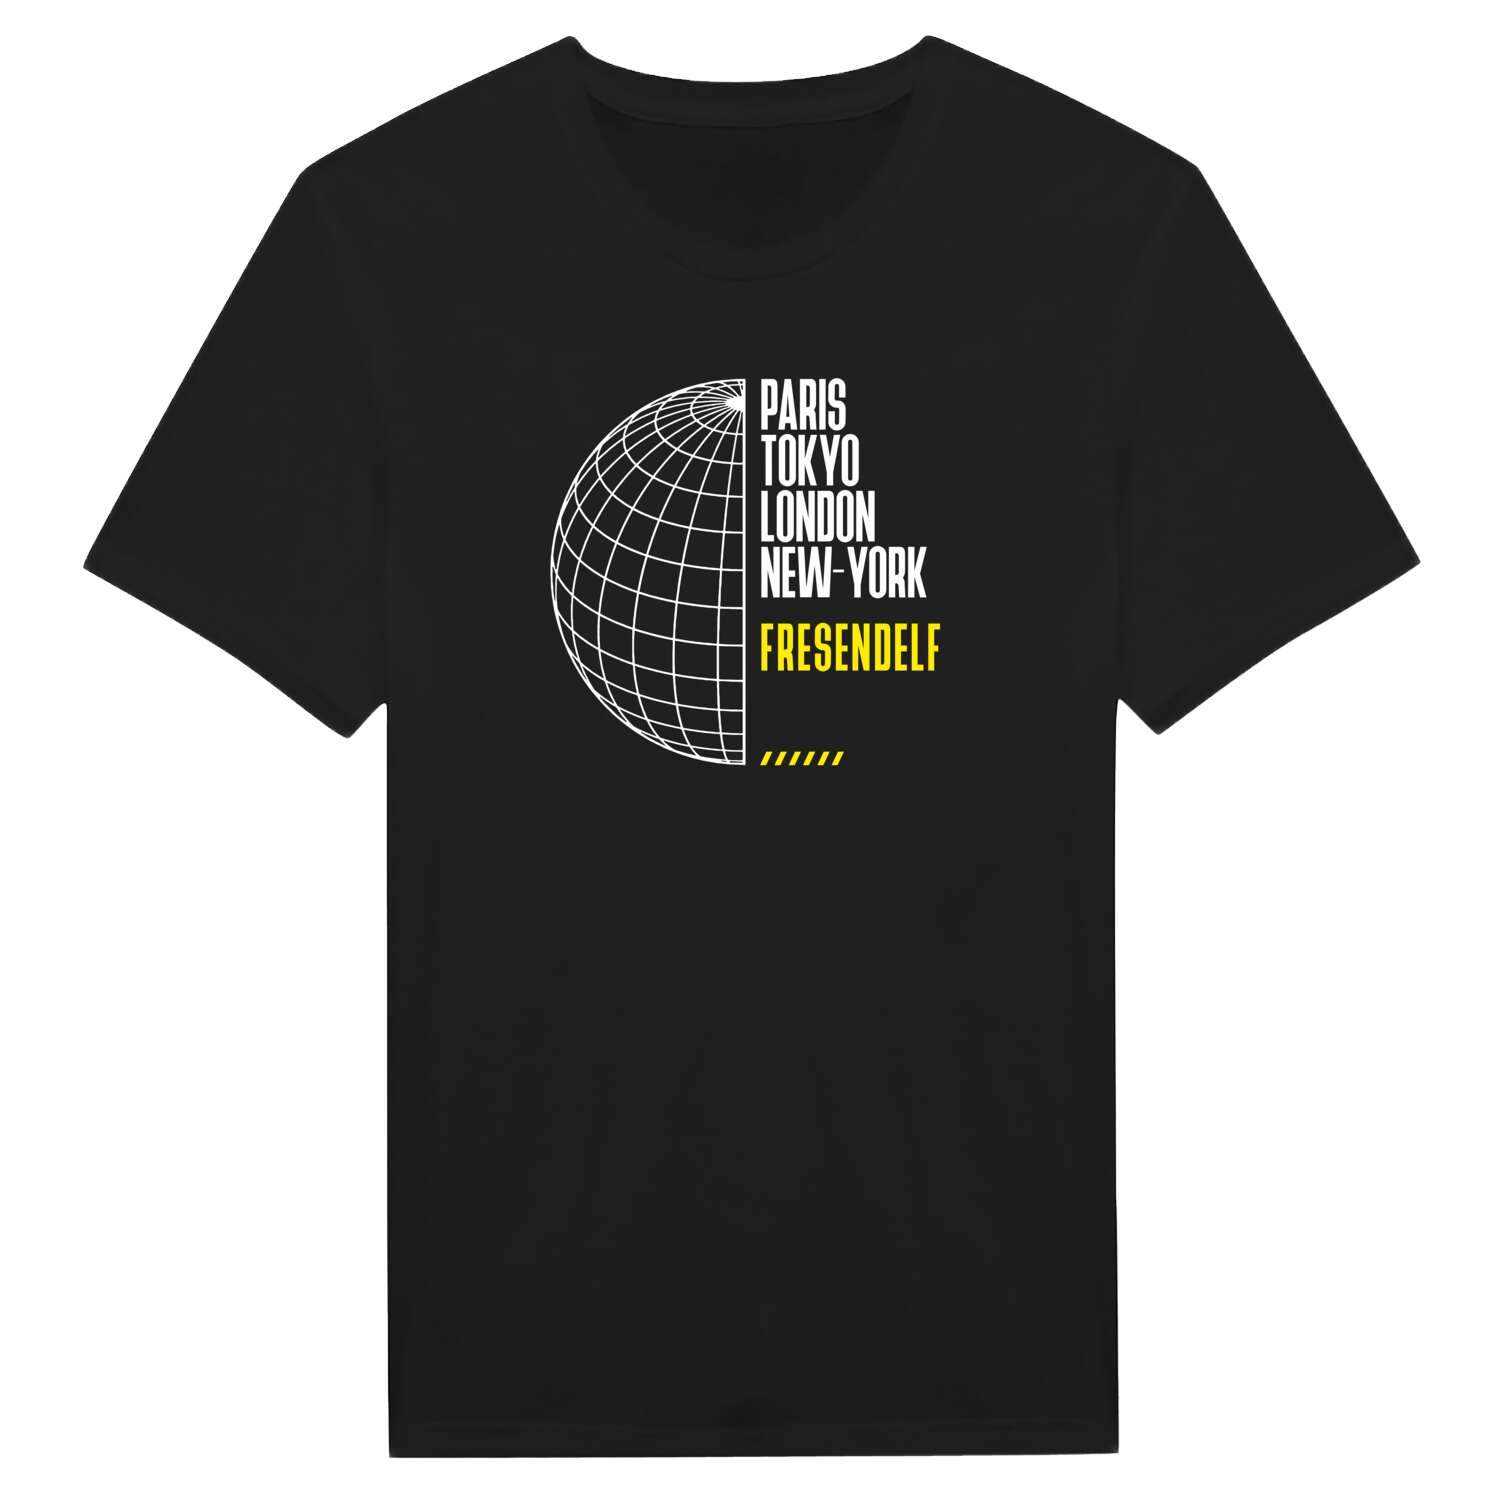 Fresendelf T-Shirt »Paris Tokyo London«